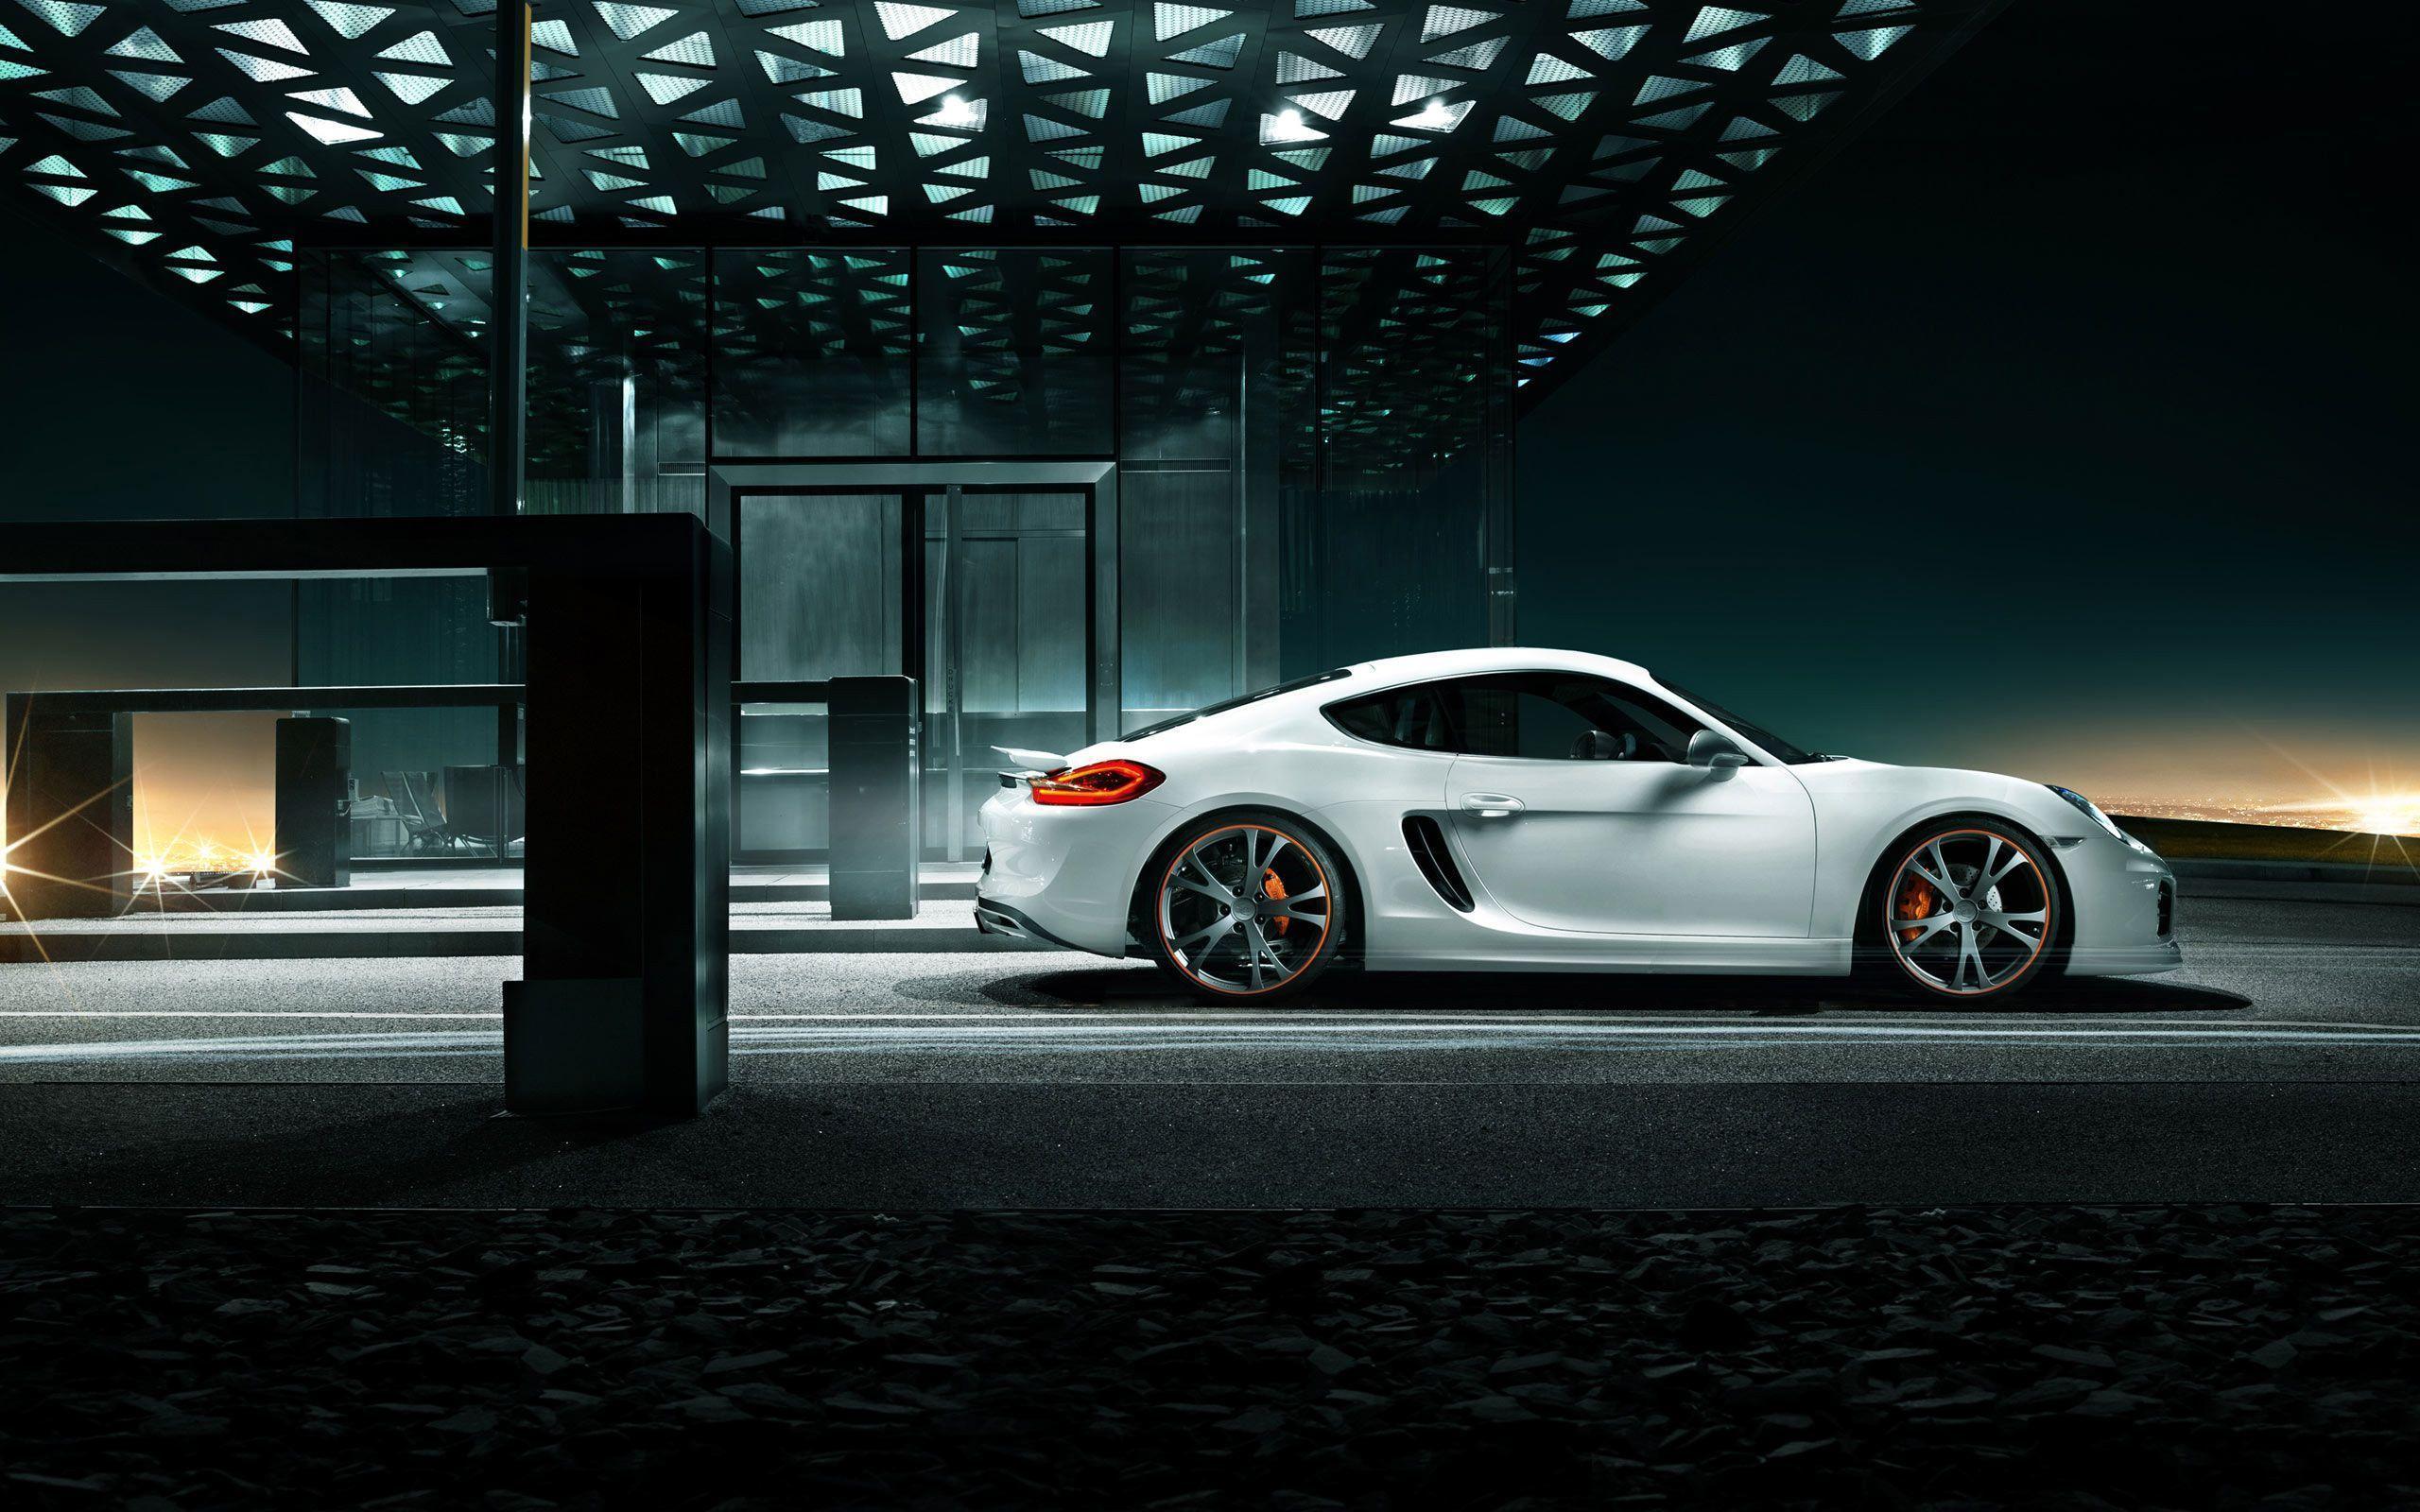 Excellent HD Porsche Wallpaper.com